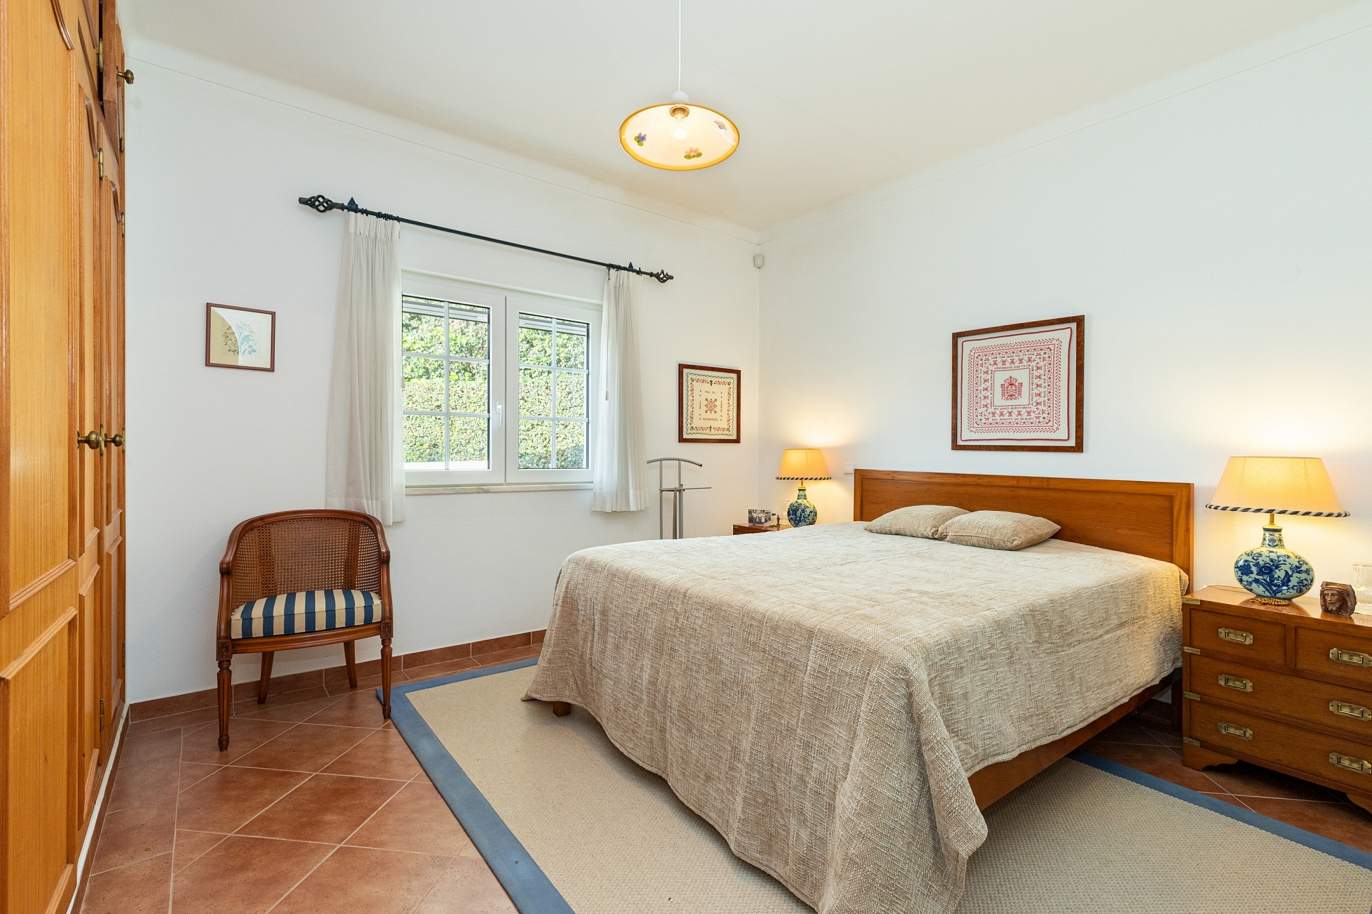 5 Bedroom Villa, near the beach, for sale in Carvoeiro, Algarve_191905